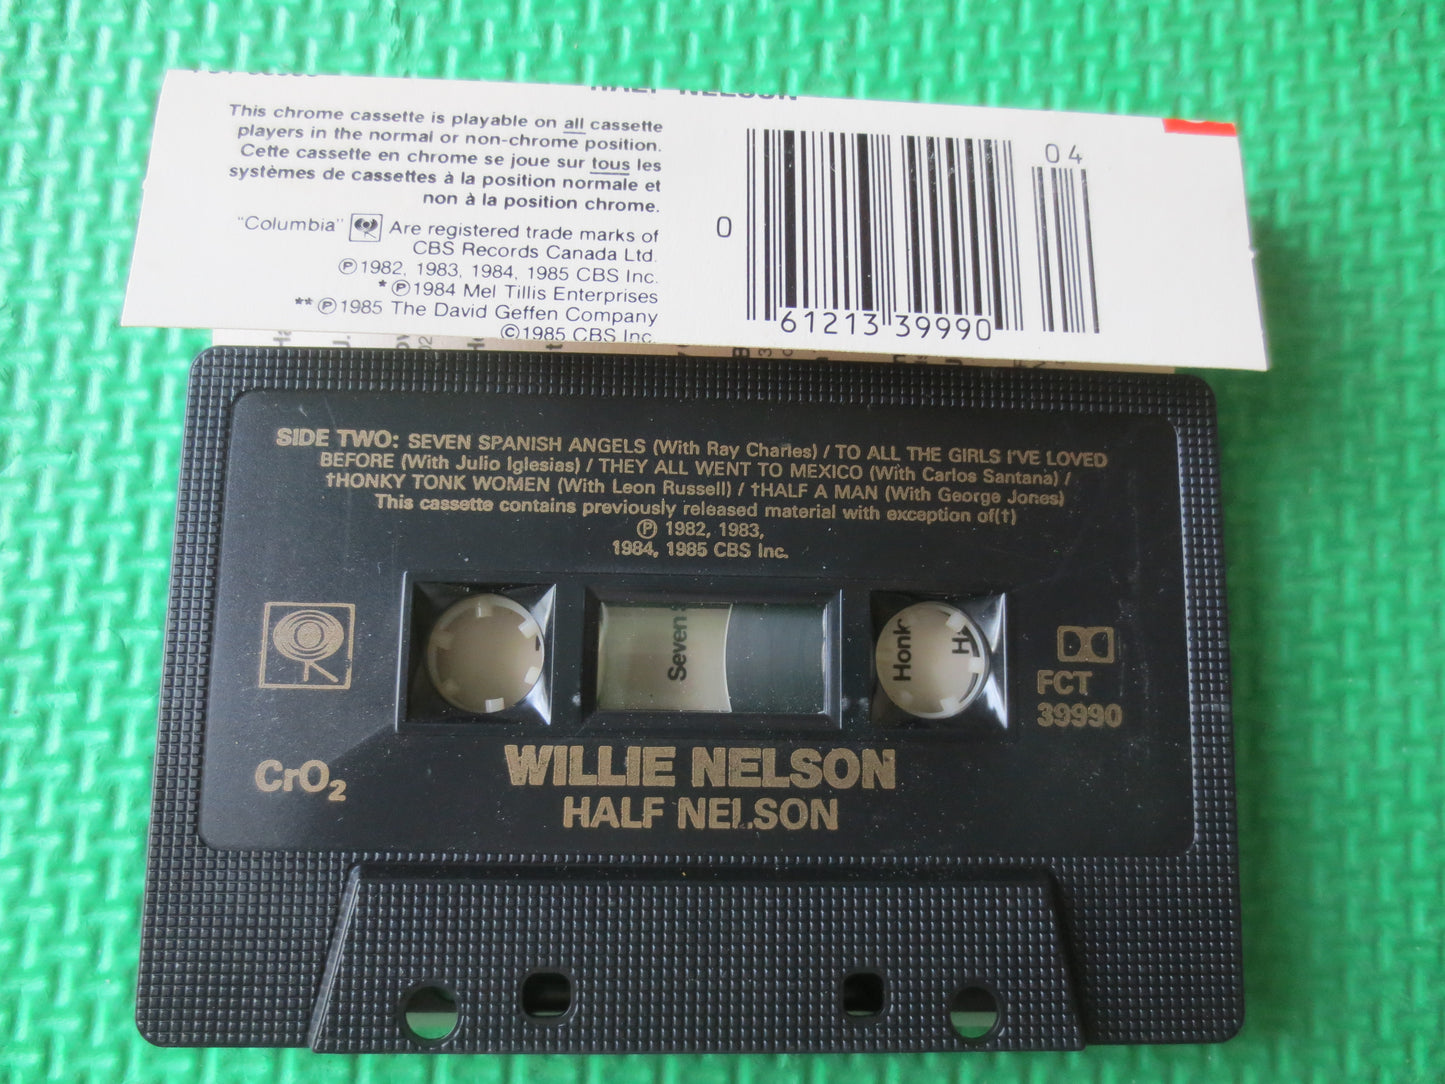 WILLIE NELSON, HALFNELSON, Willie Nelson Tape, Willie Nelson Album, Tape Cassette, Country Cassette, Tape, 1985 Cassette